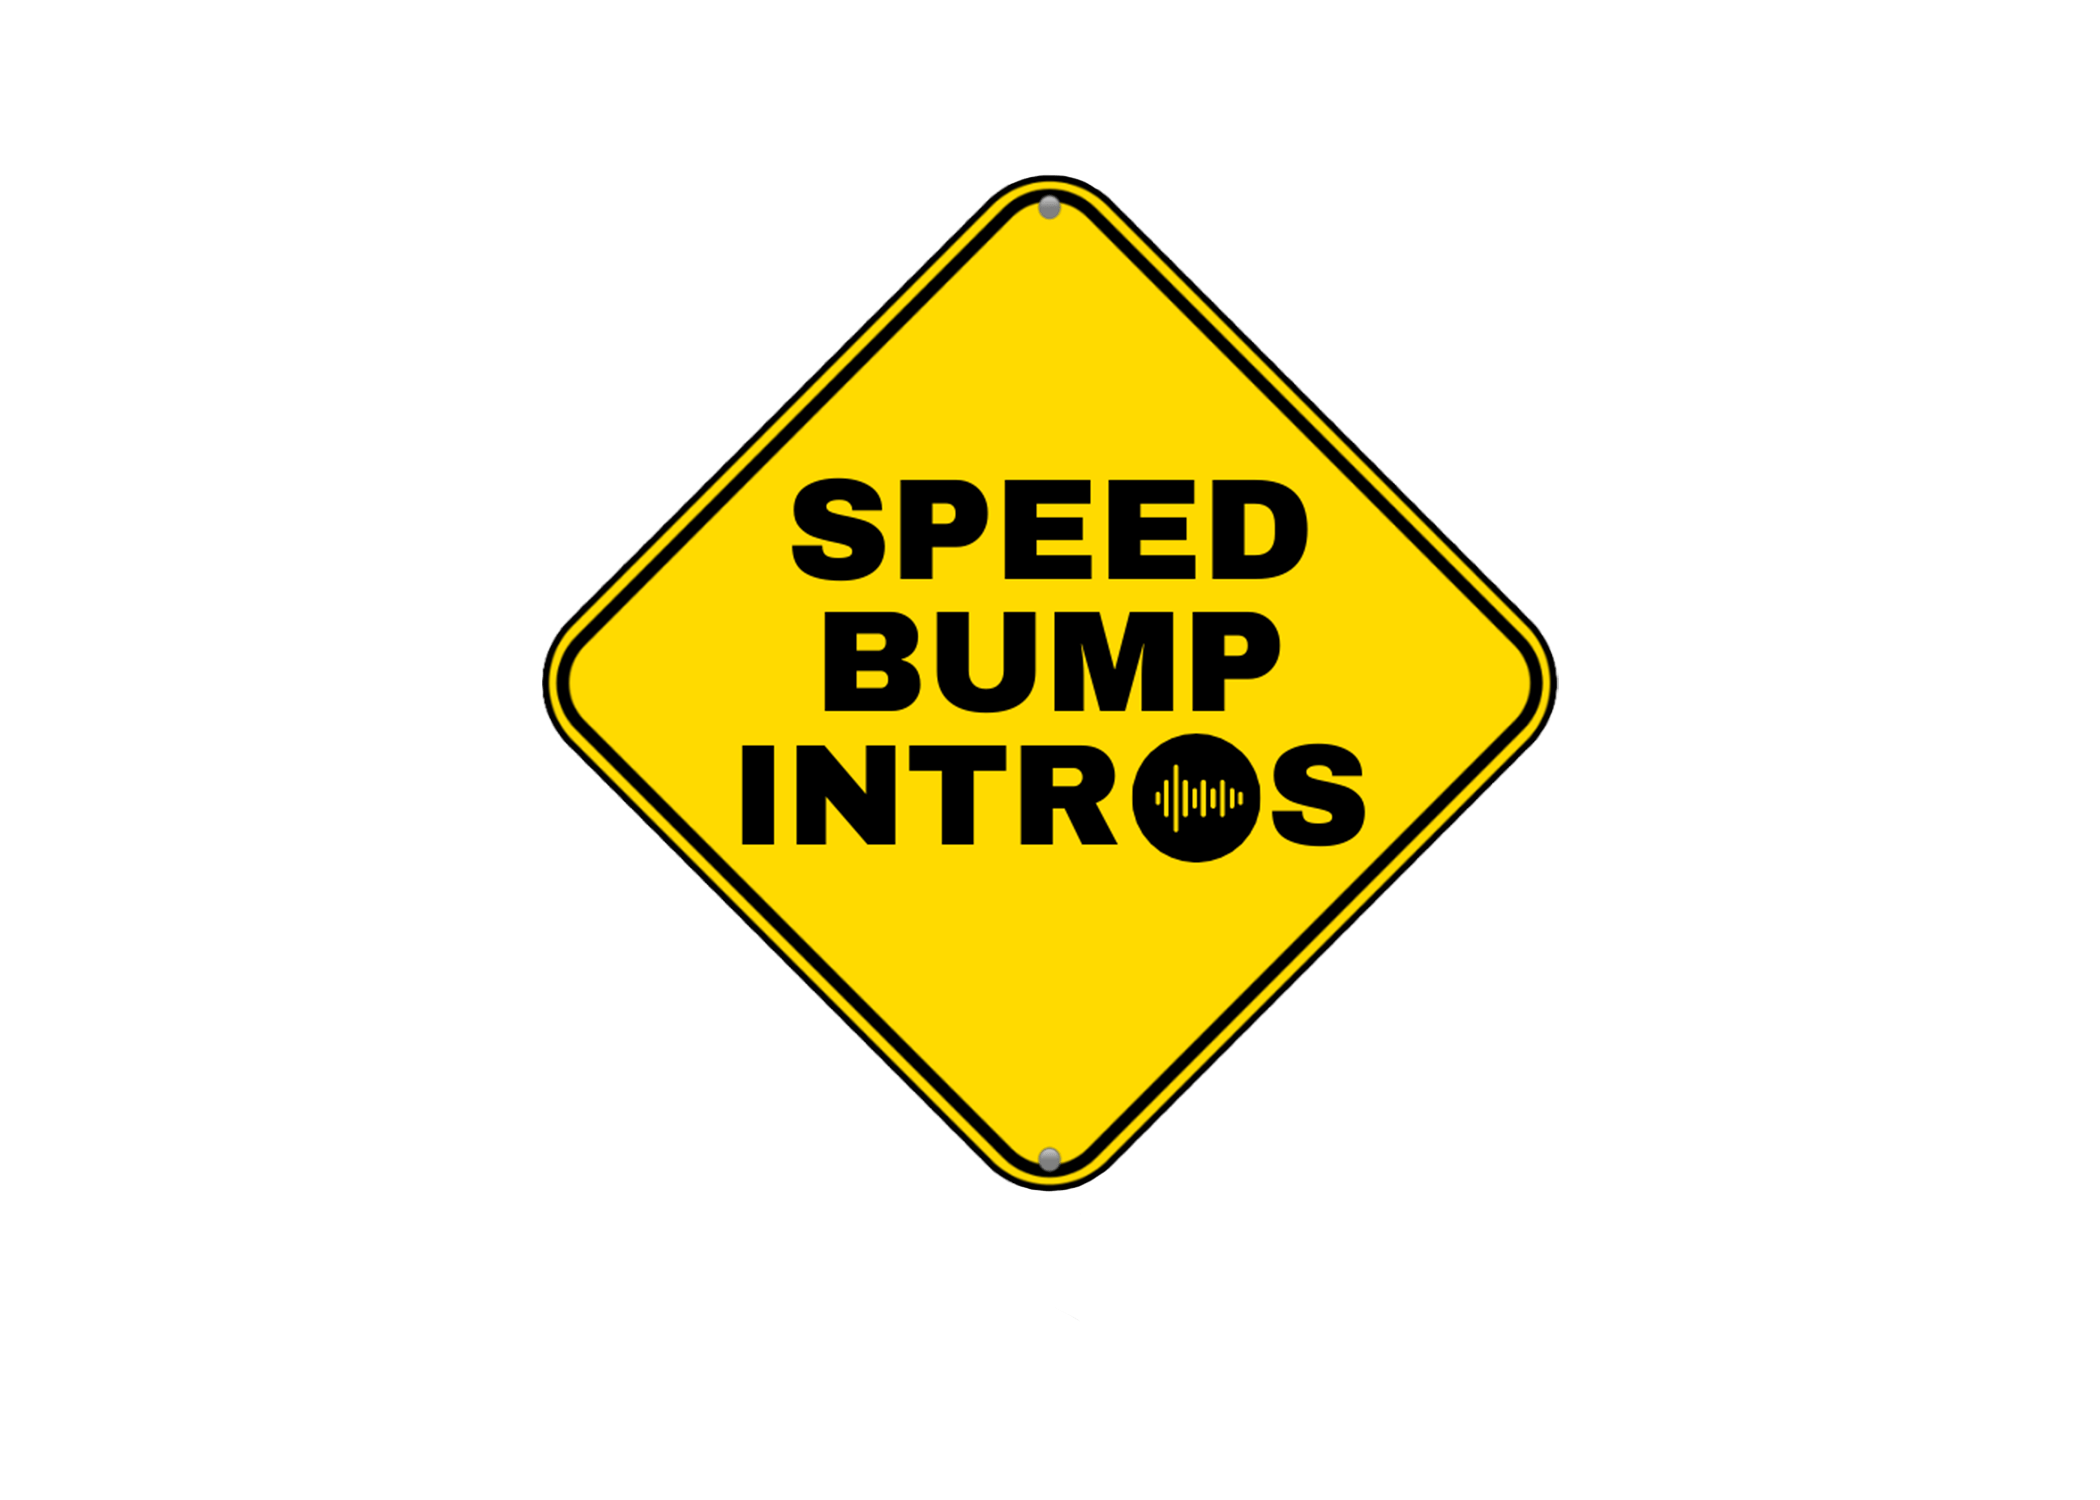 SpeedBump Intros logo